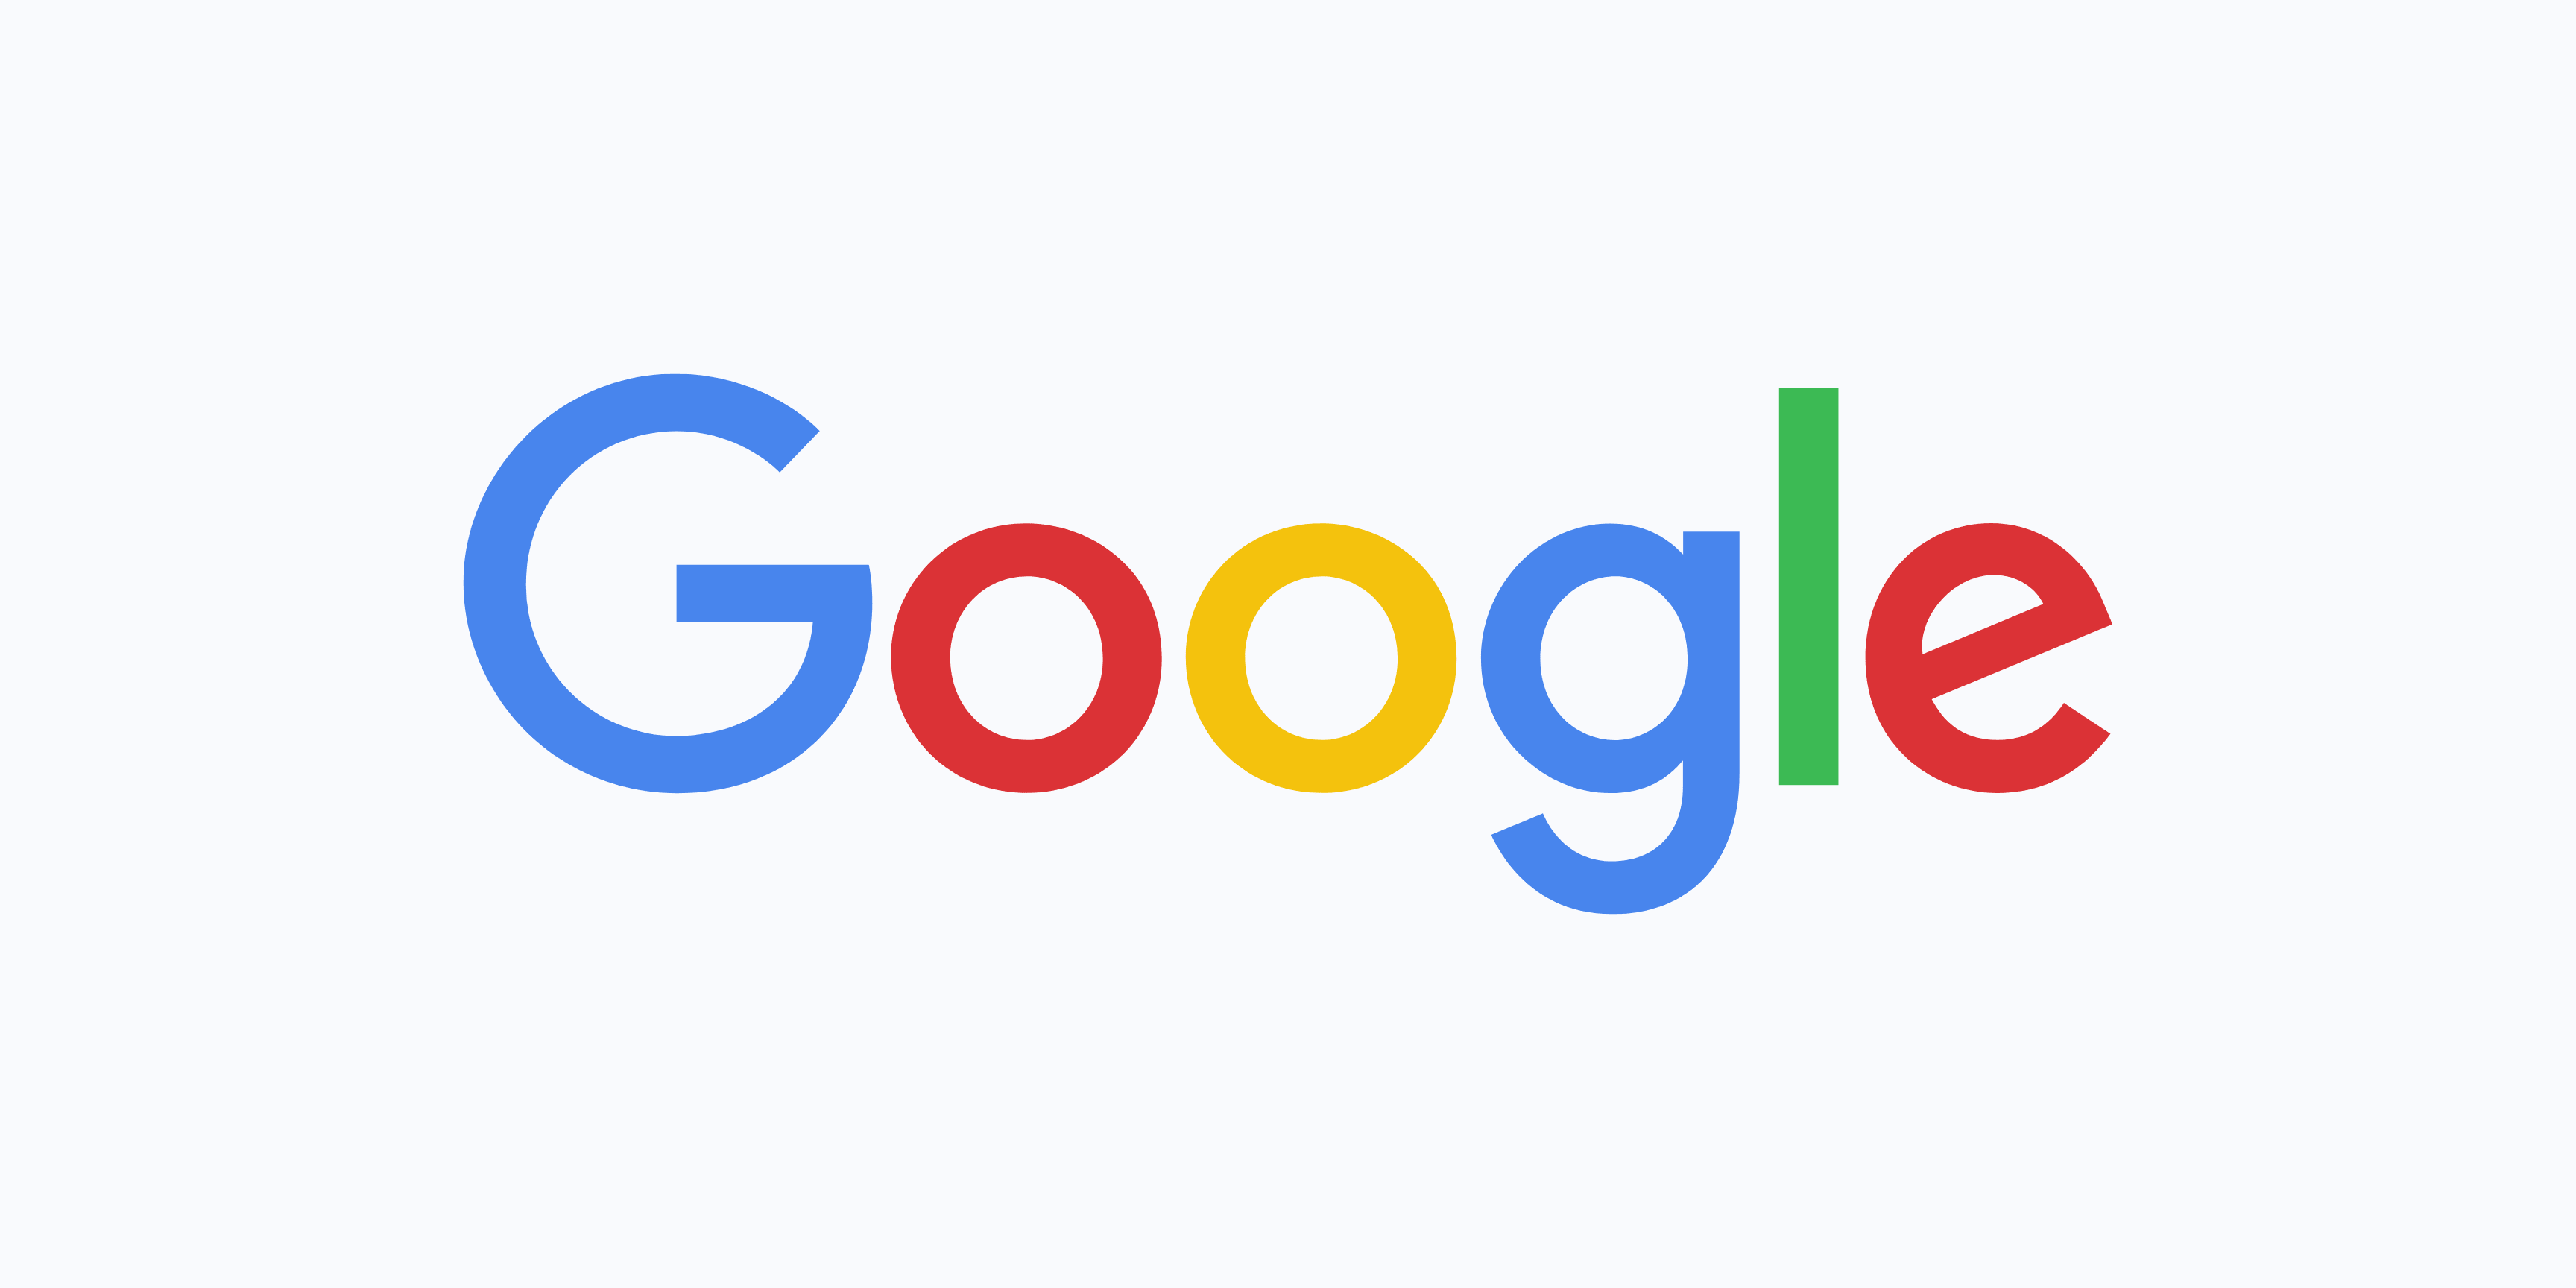 Google competitors analysis